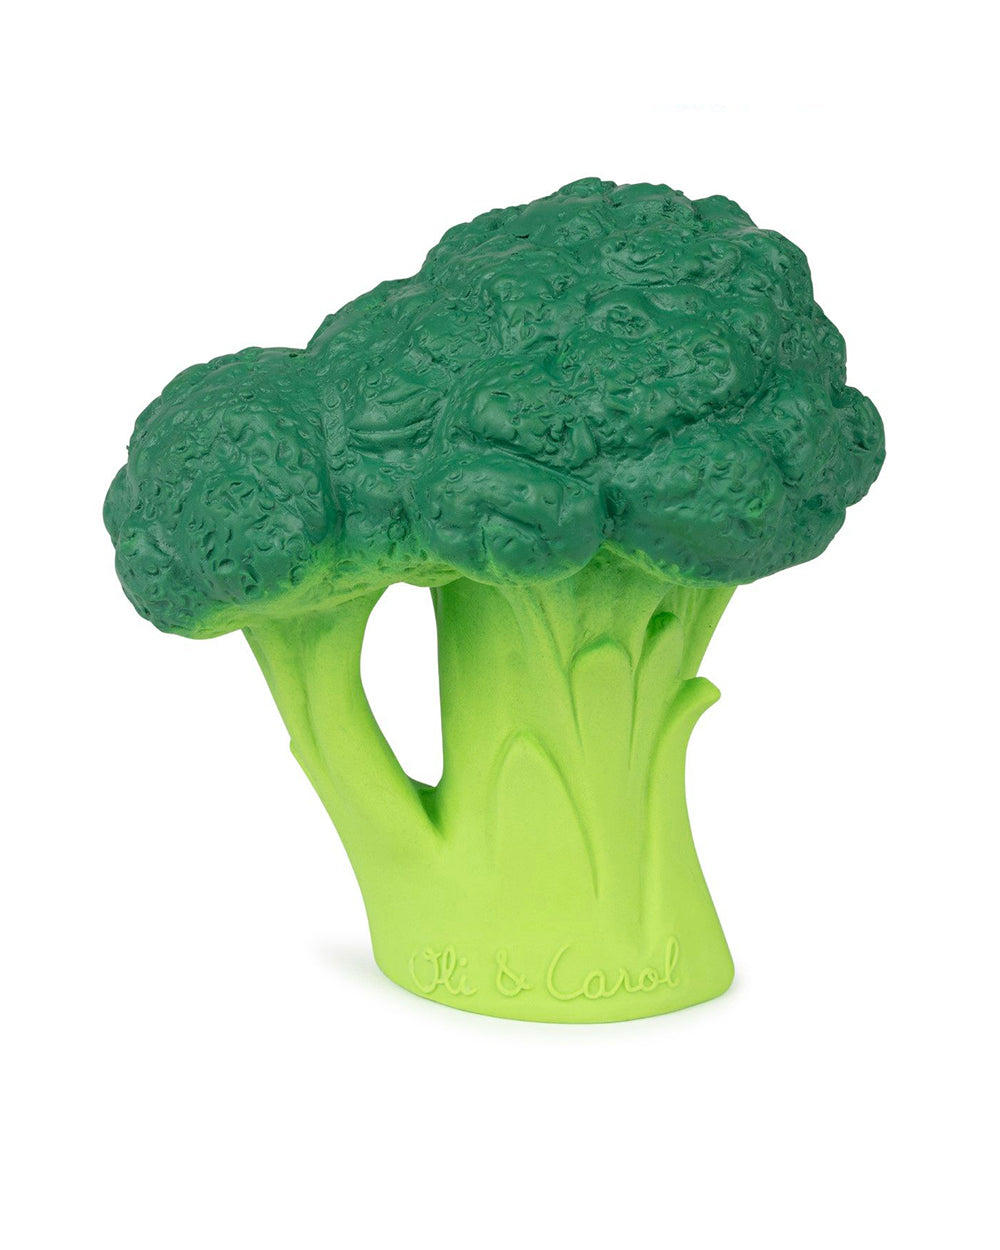 Brucy The Broccoli